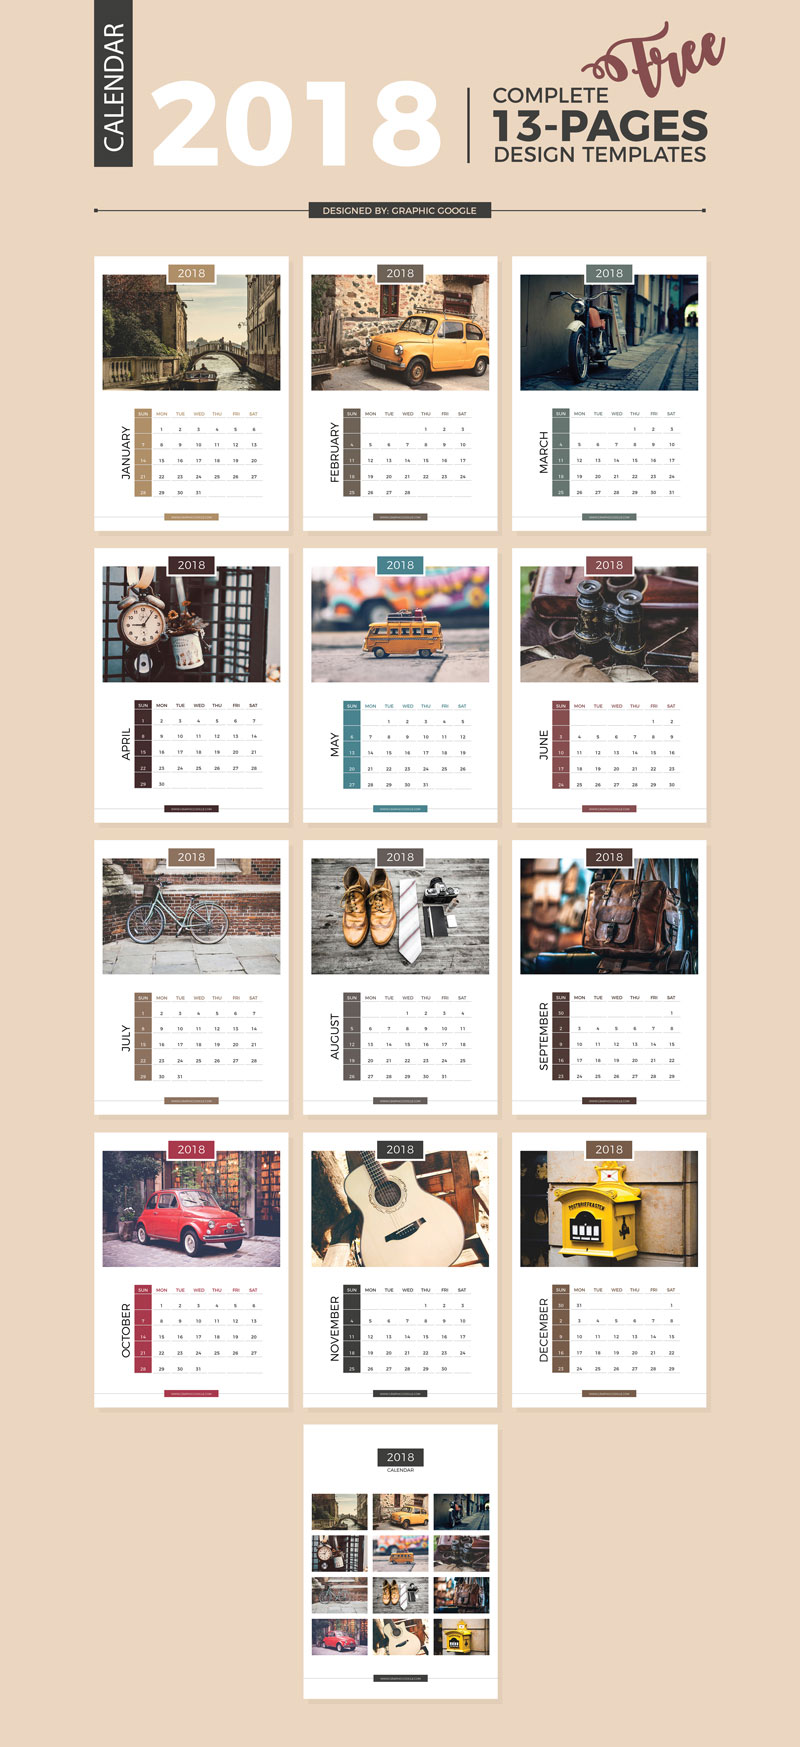 Free-Complete-2018-Calendar-Design-Templates